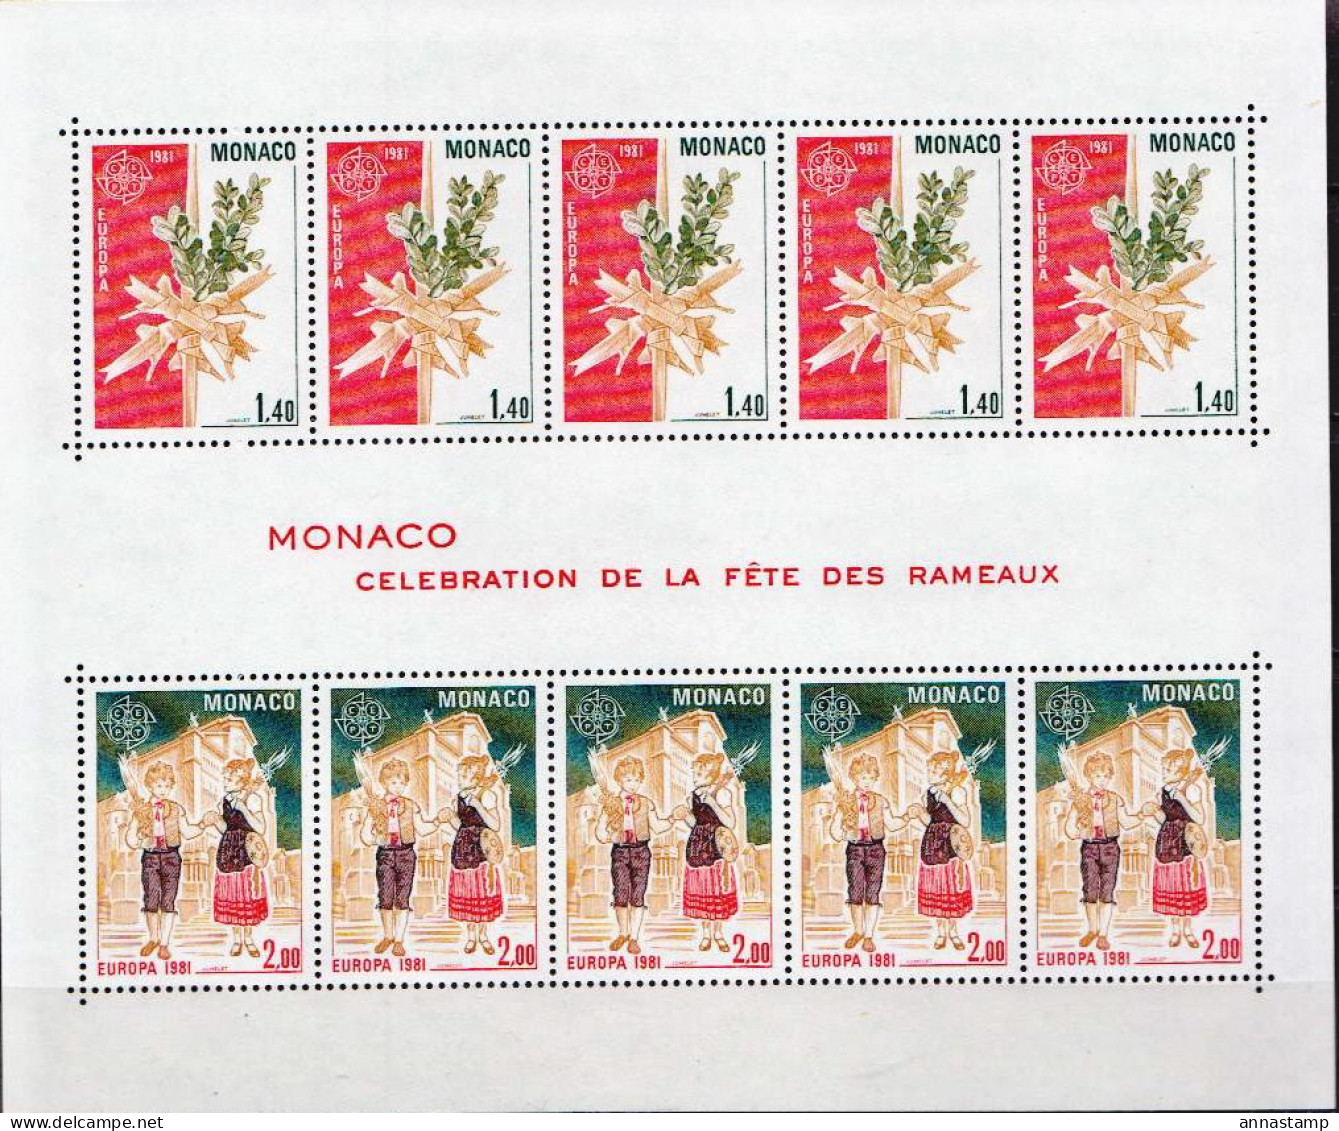 Monaco MNH Minisheet - 1981